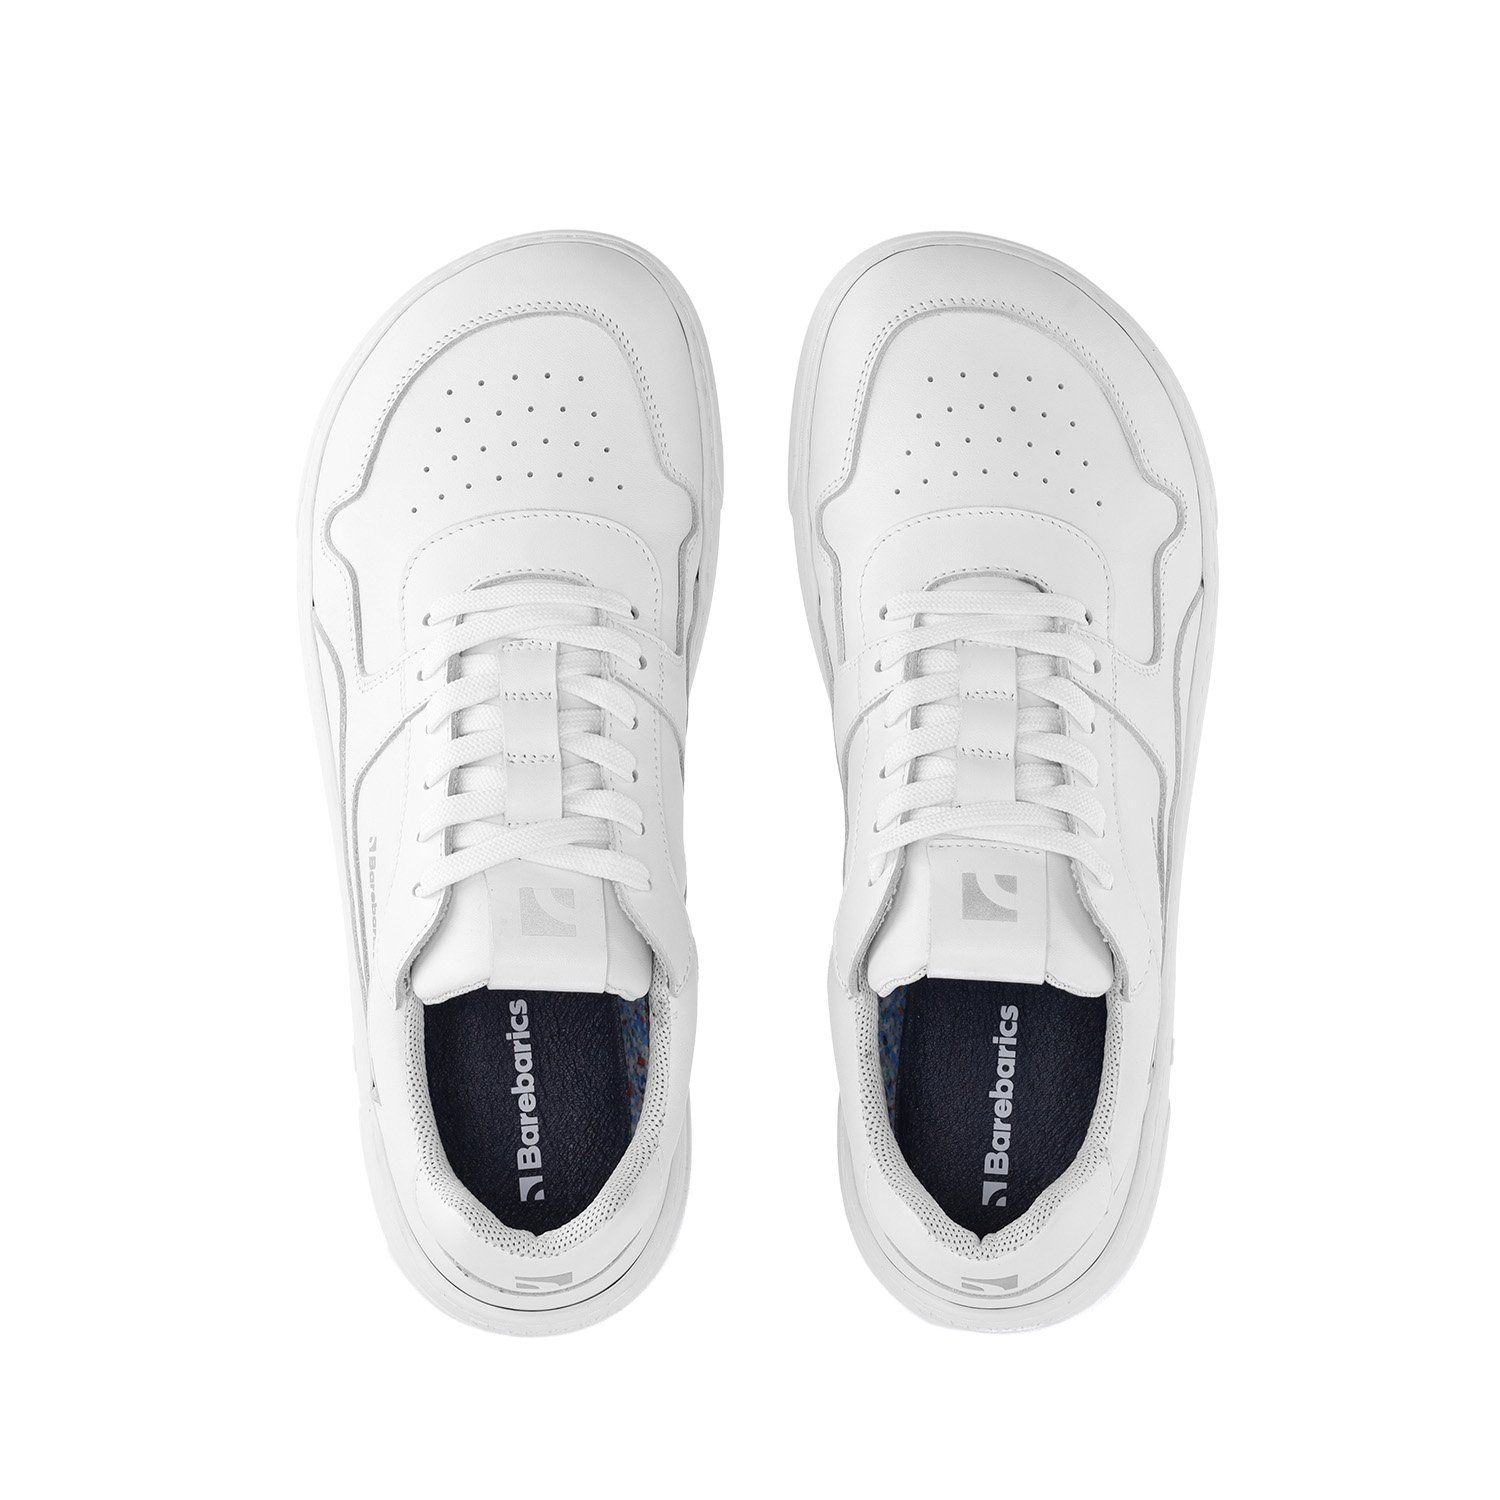 Barefoot Sneakers Barebarics Zing - All White - Leather | Barebarics